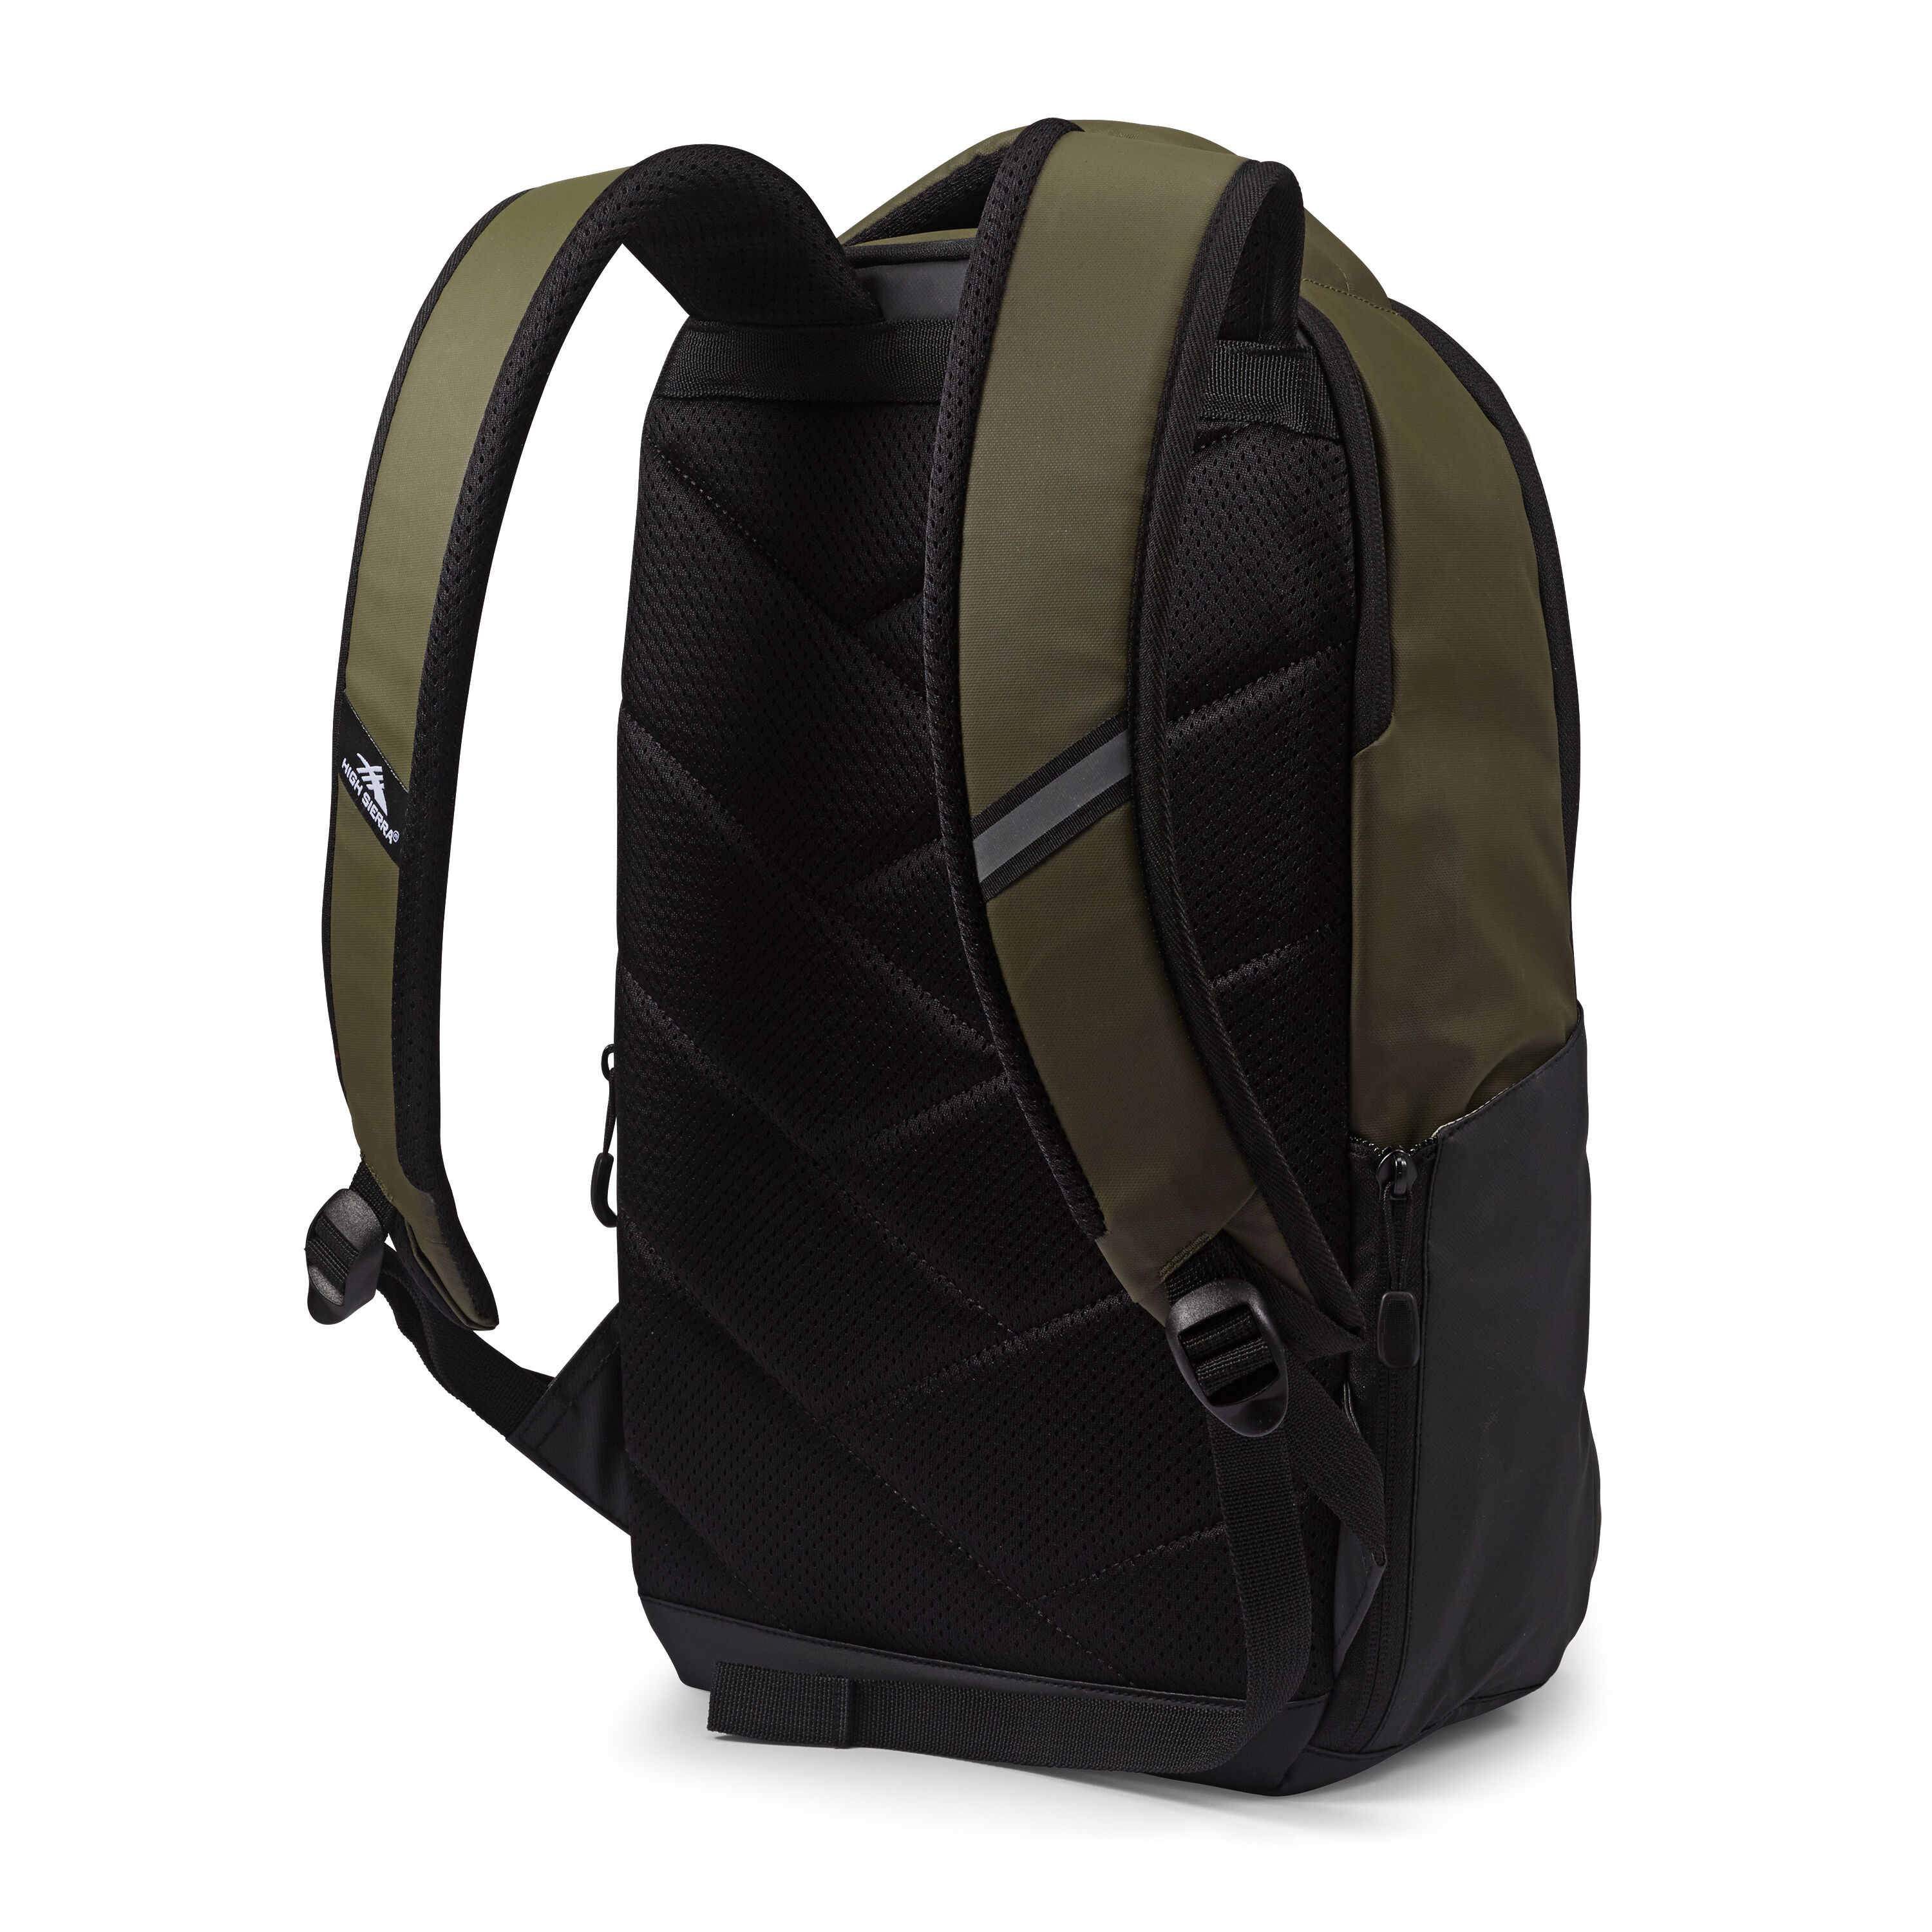 Buy Luna Backpack for USD 23.99 | High Sierra